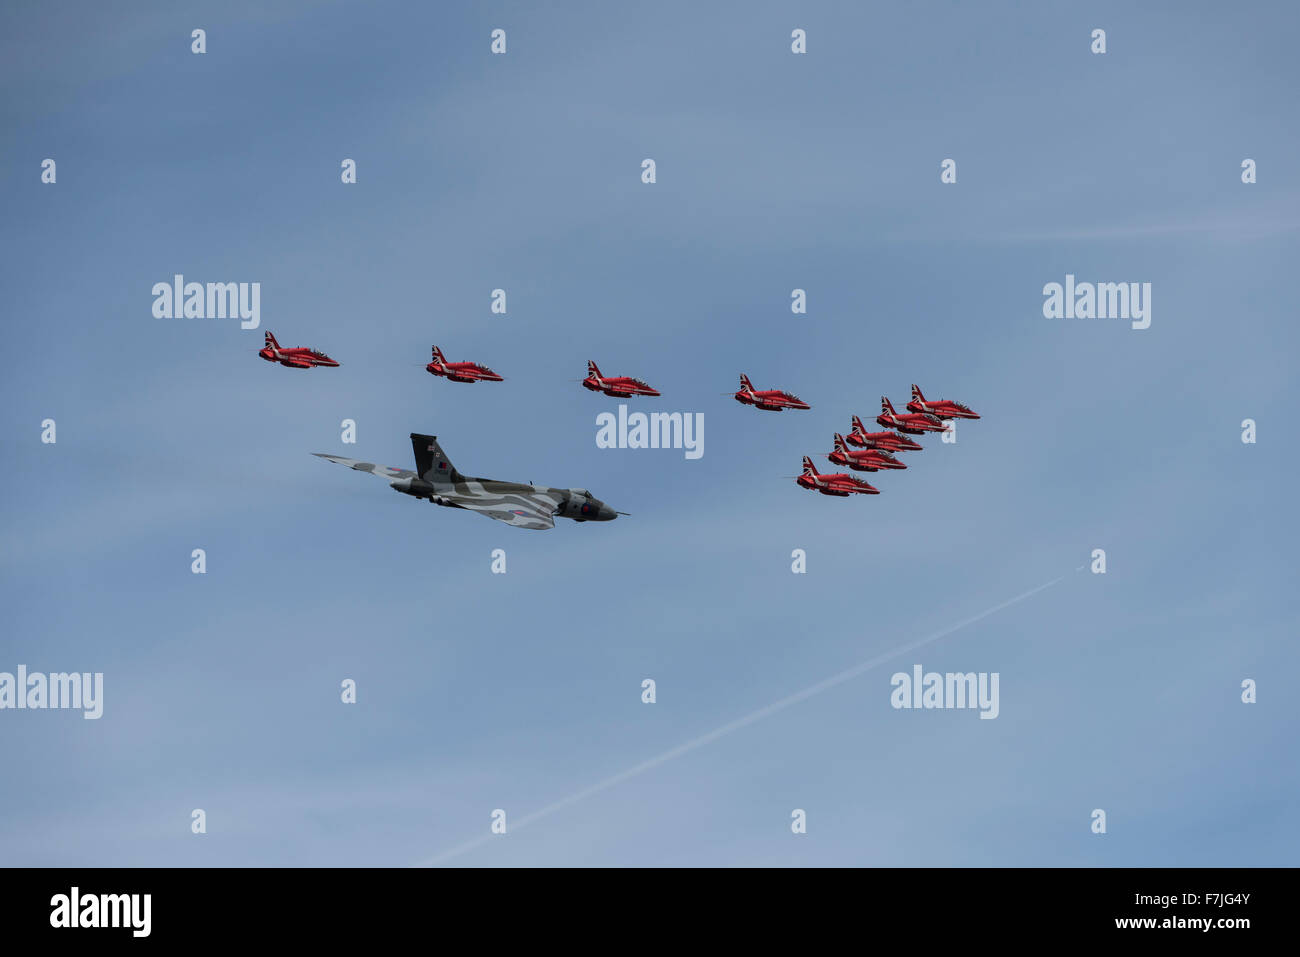 La RAF britannique des flèches rouges aerobatic display team volent en formation avec XH558 le seul exemple de l'avion Avro Vulcan Bomber Banque D'Images